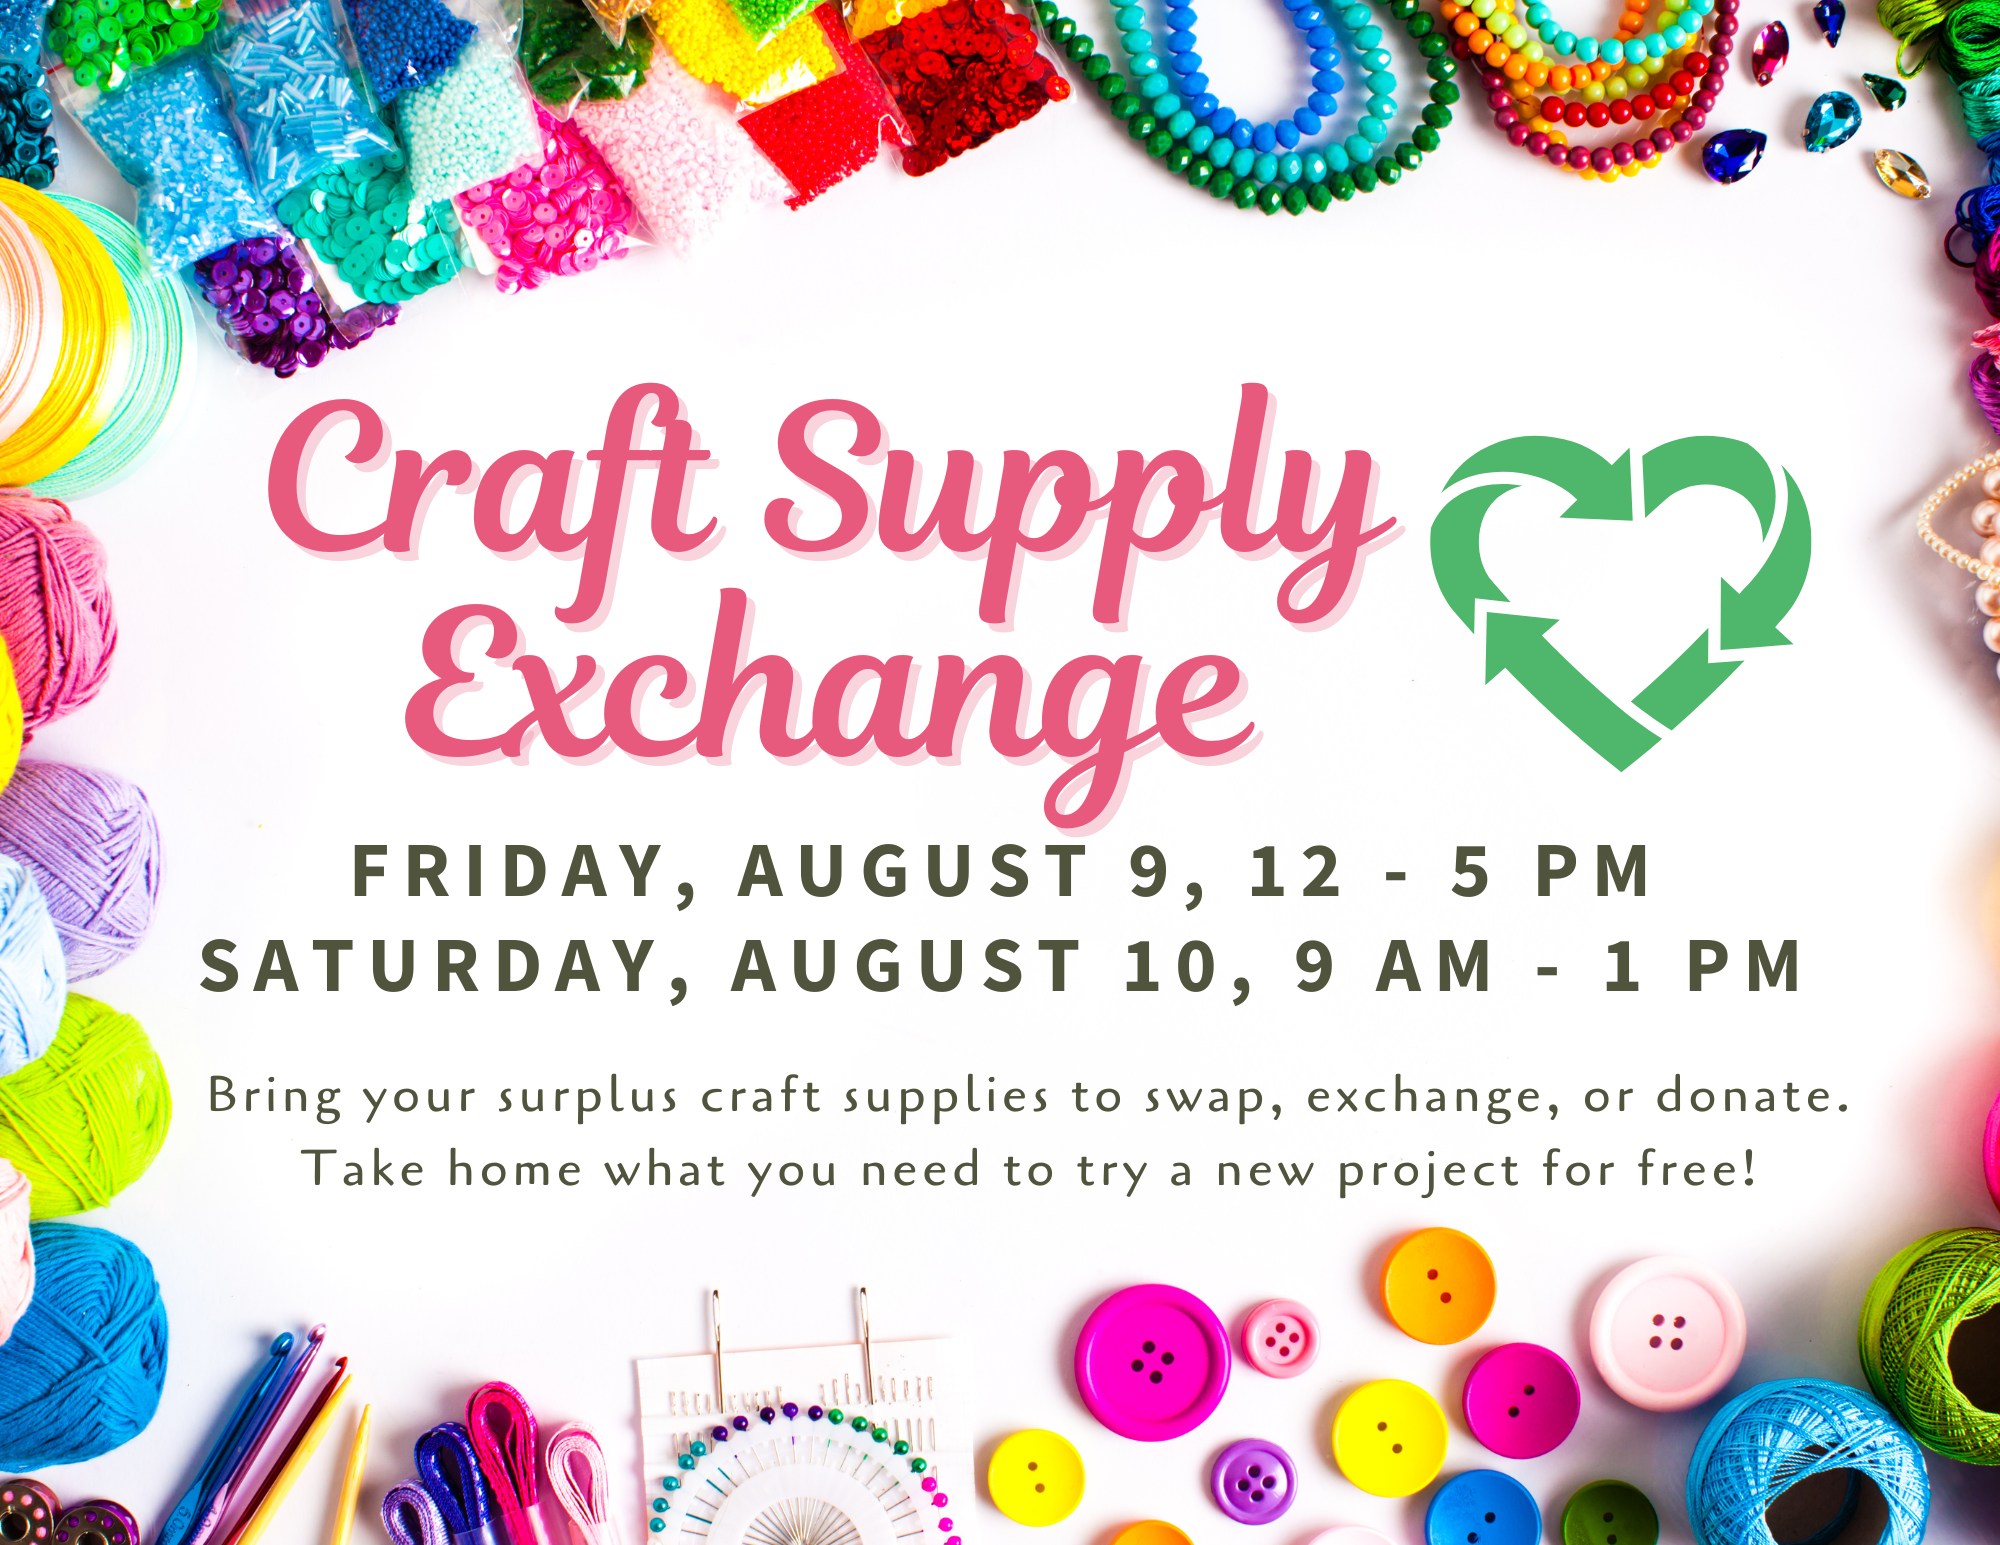 Craft Supply Exchange, Friday, August 9, 12-5 pm. Saturday, August 10, 9 am - 1 pm